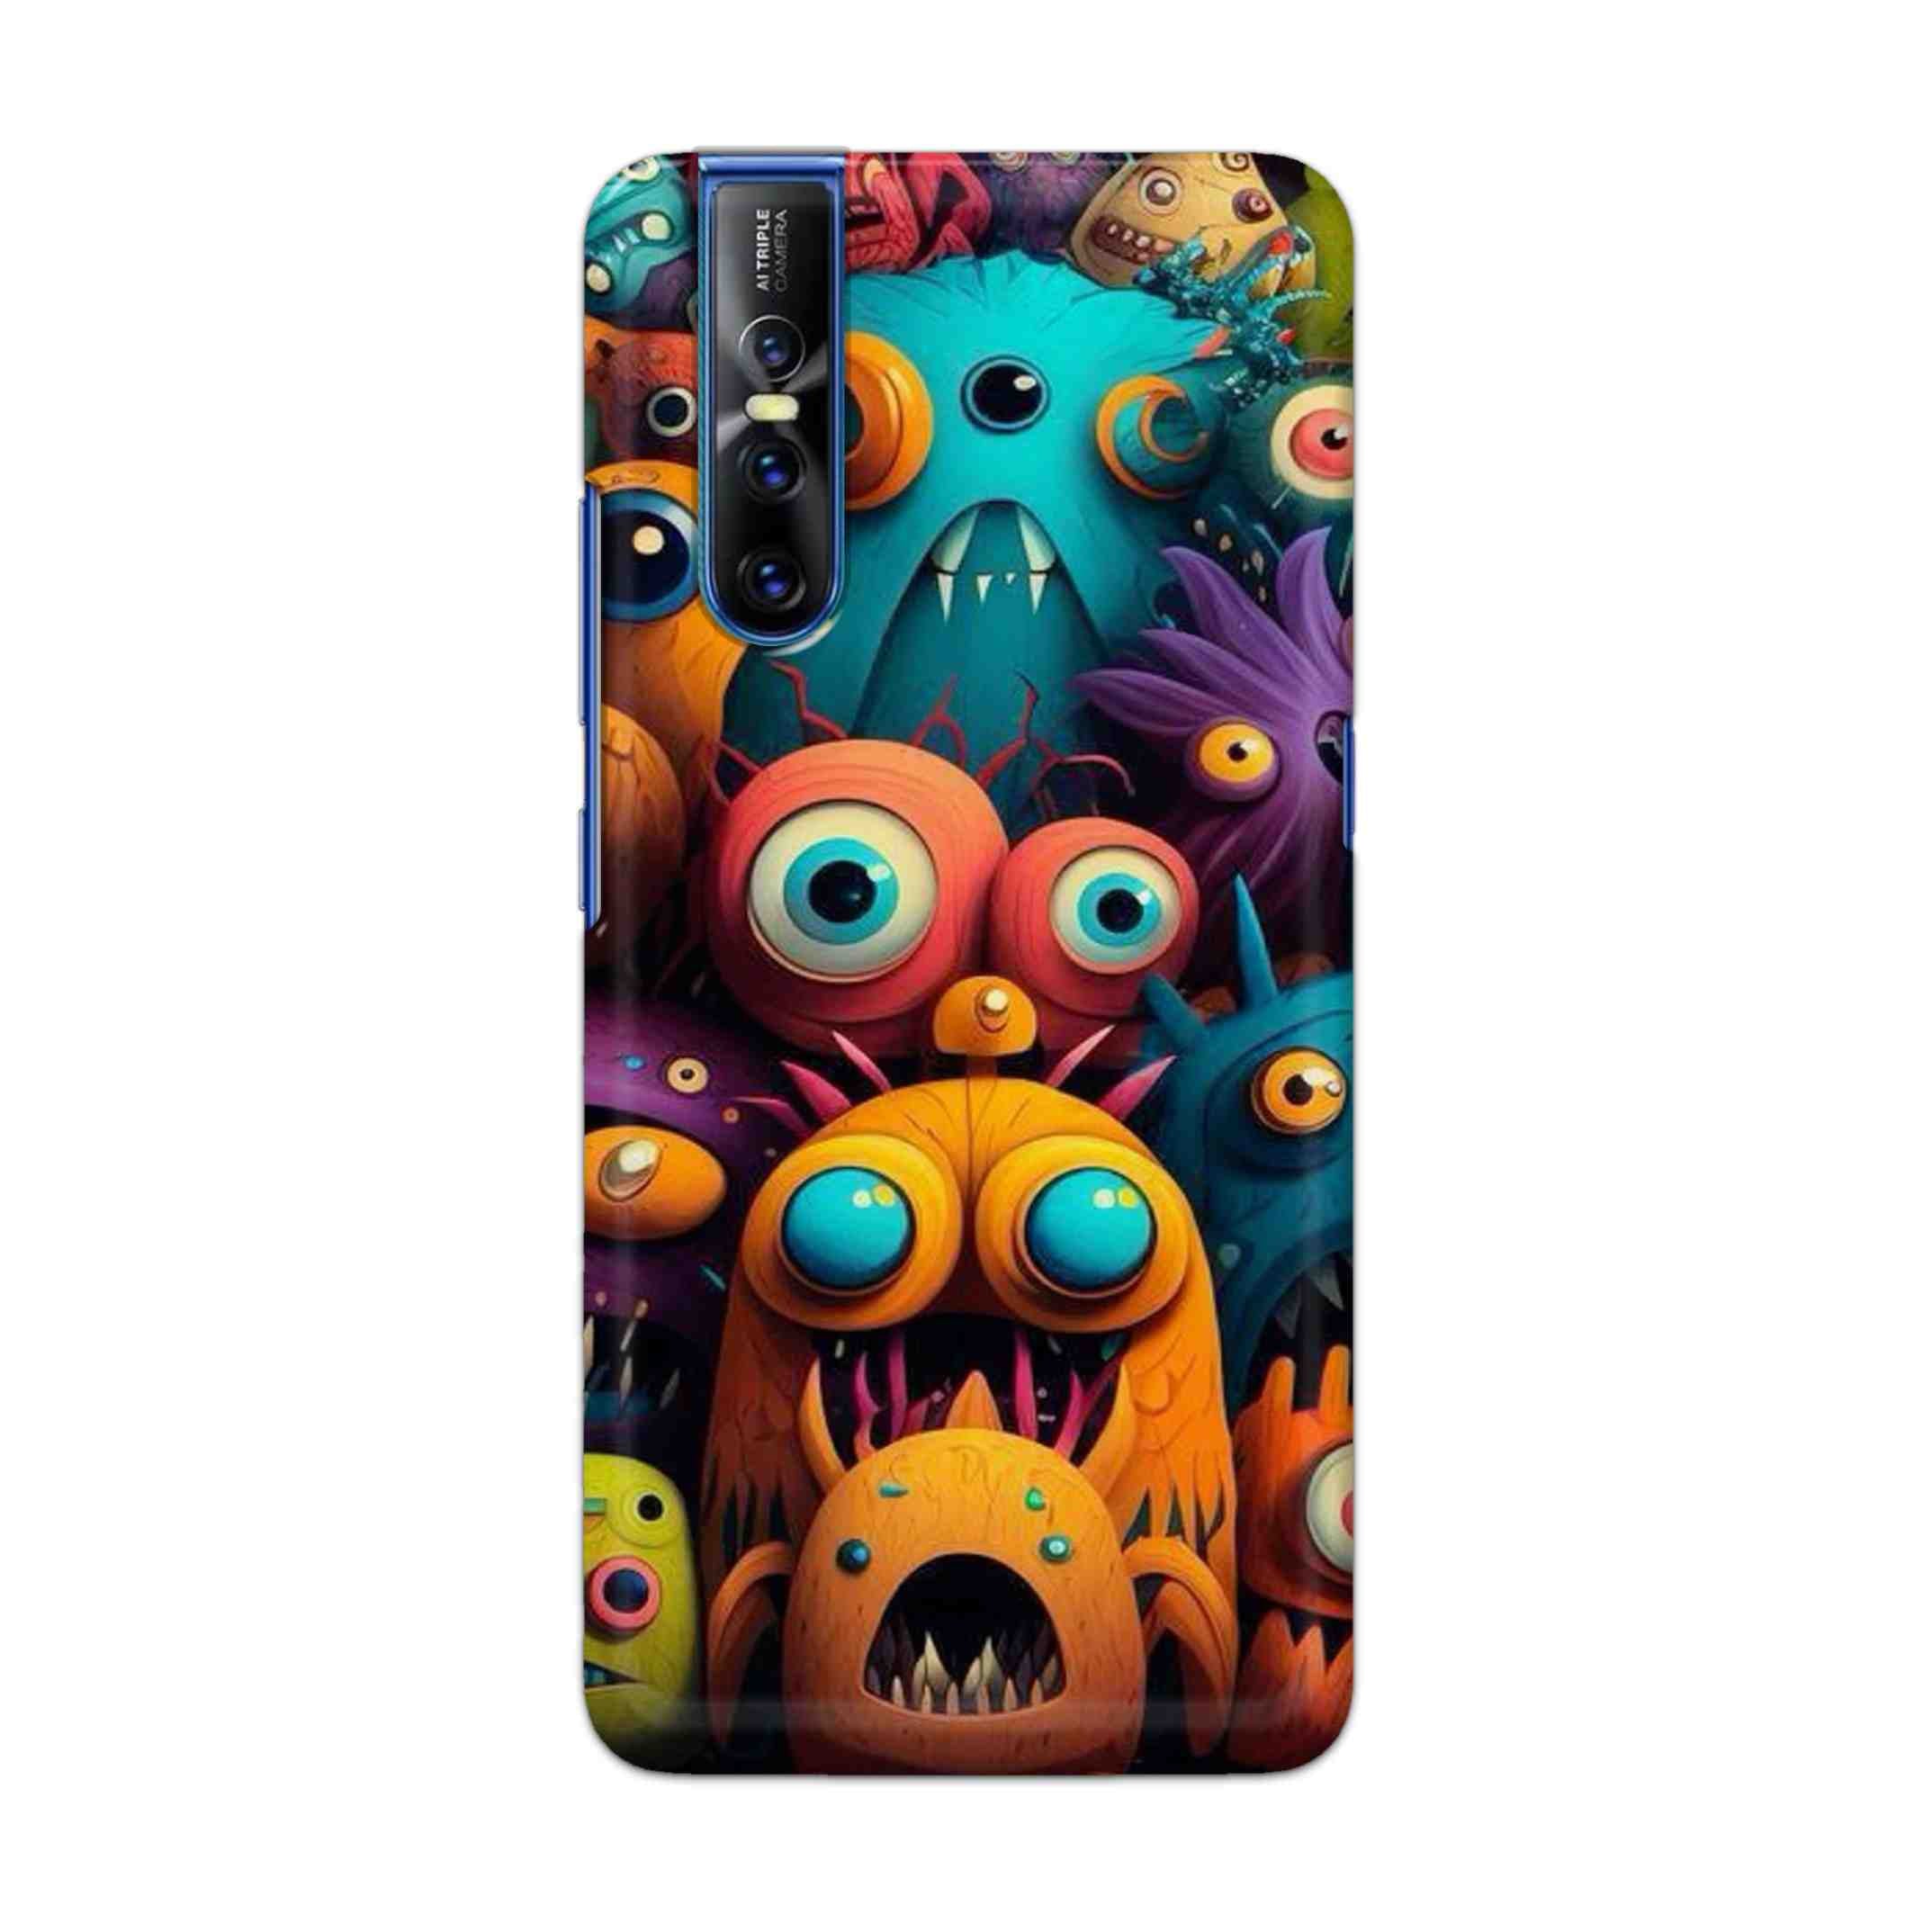 Buy Zombie Hard Back Mobile Phone Case Cover For Vivo V15 Pro Online